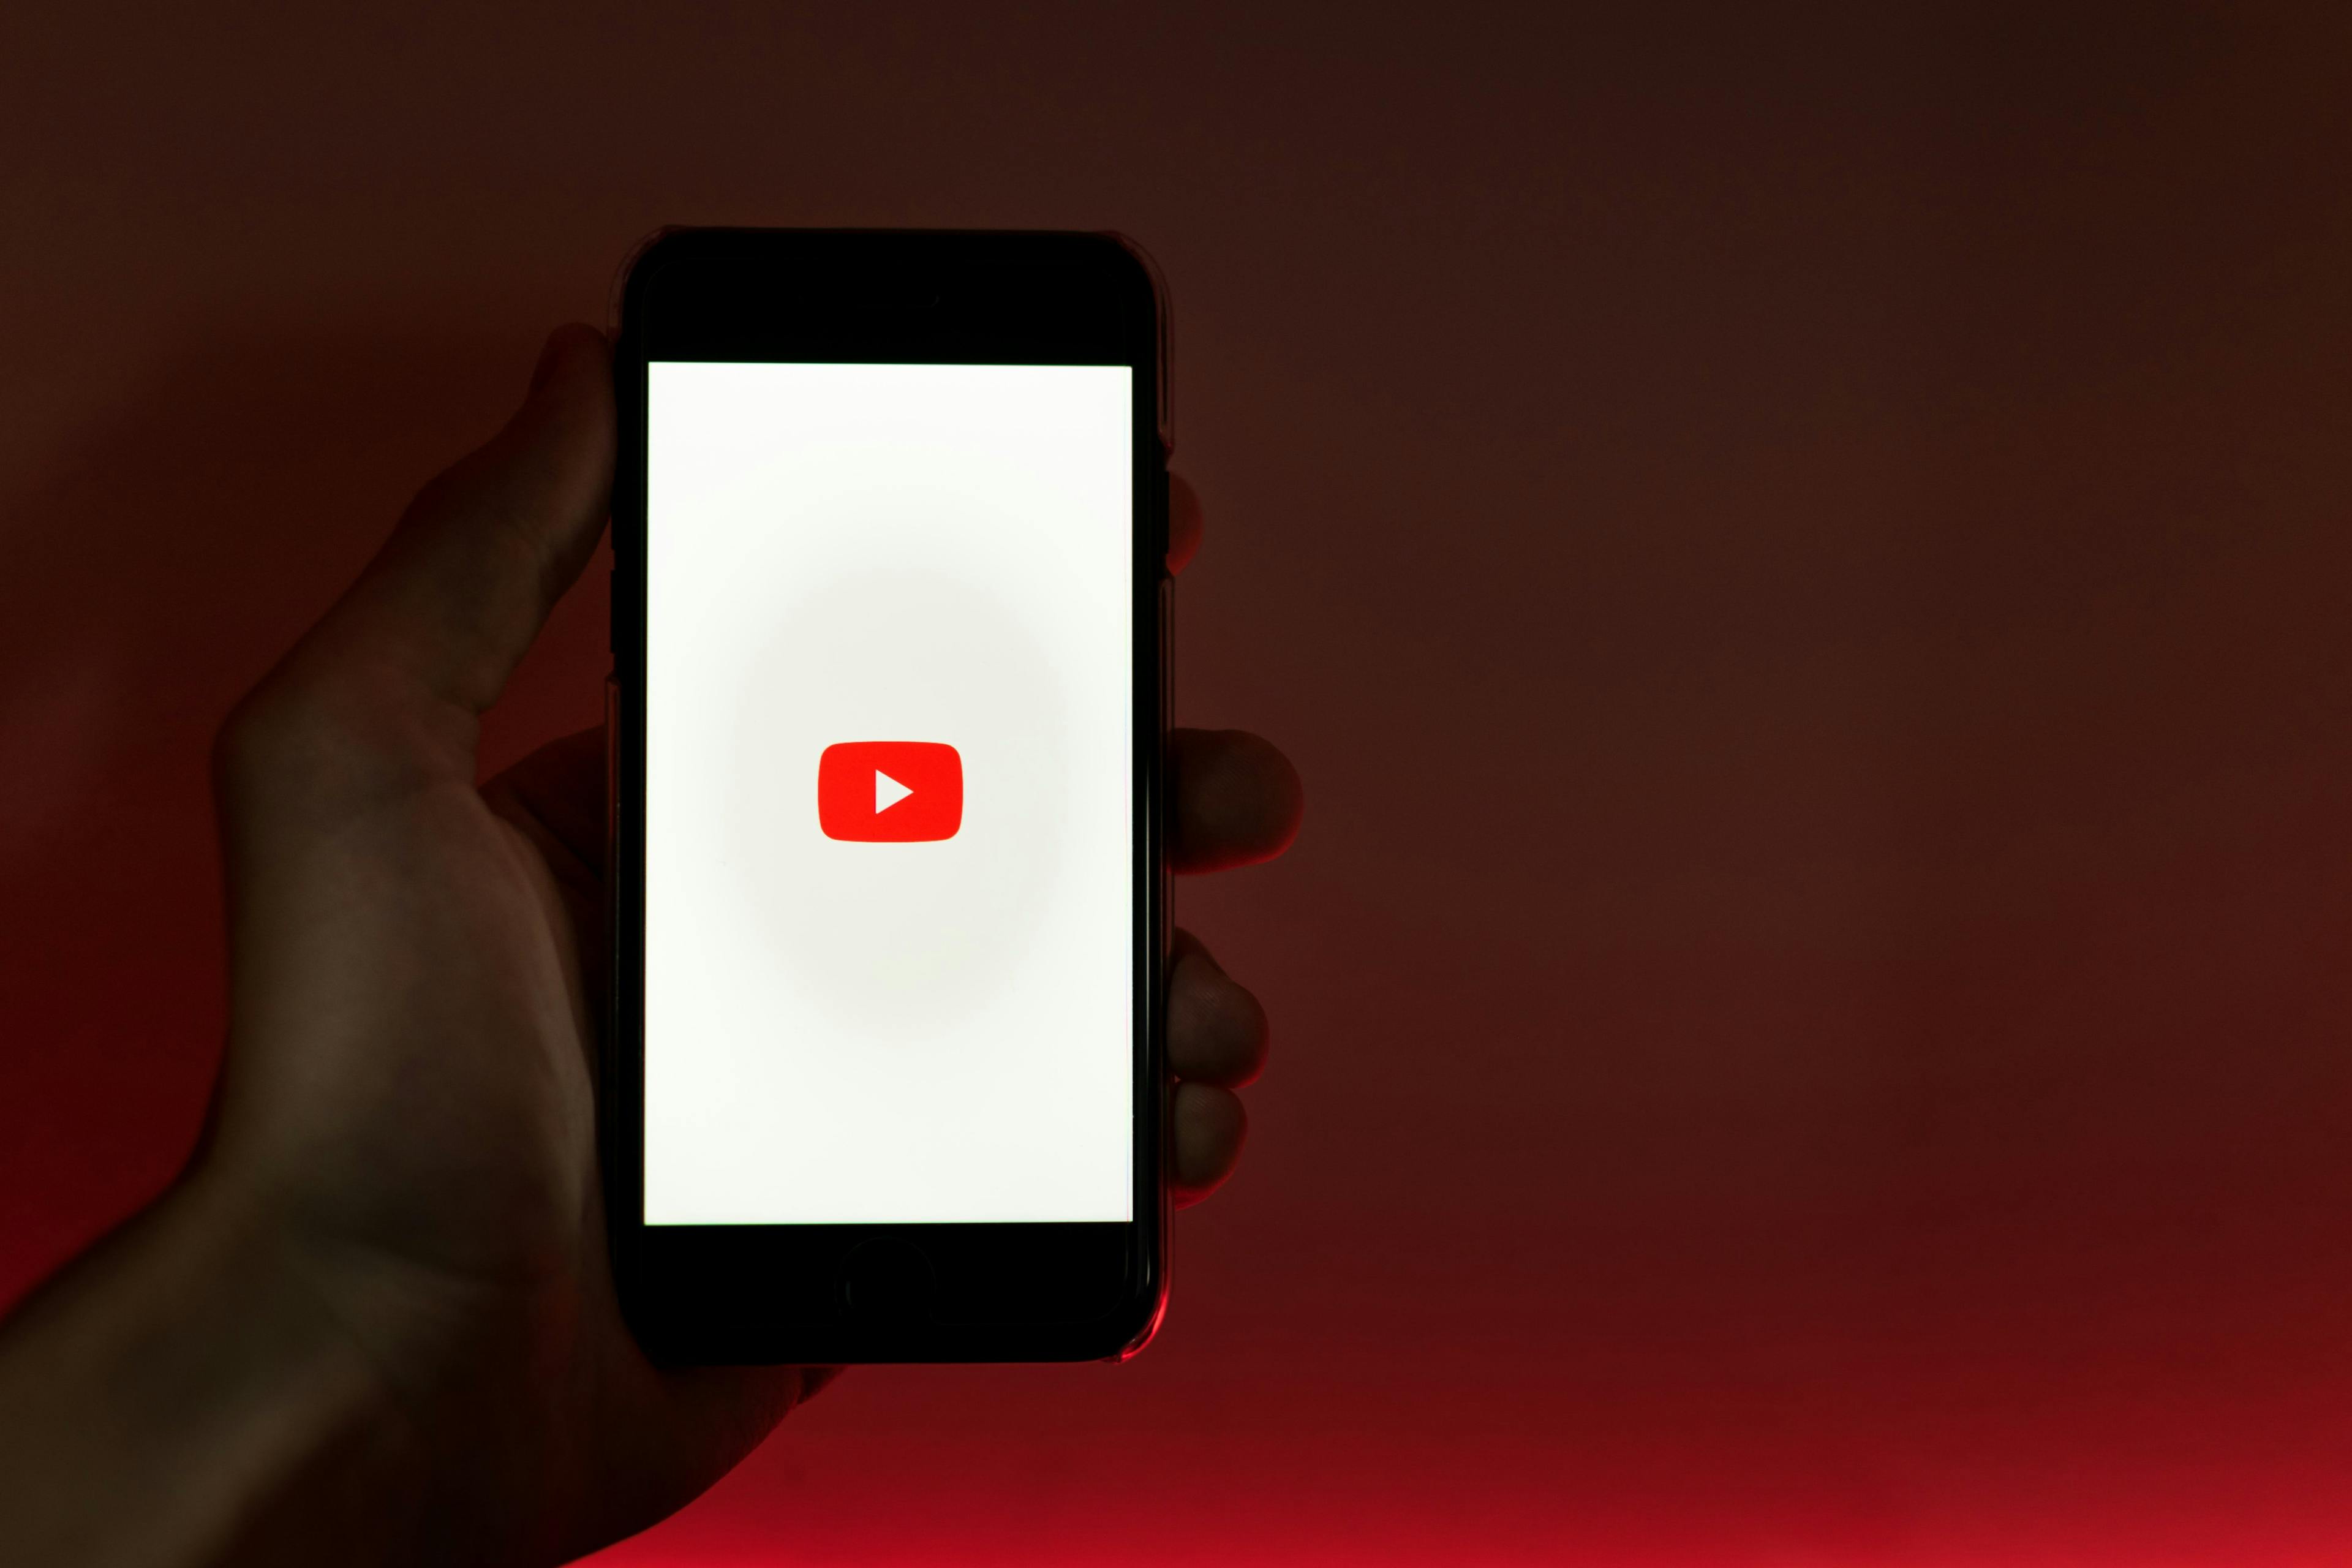 YouTube Videos Spread Cancer Misinformation